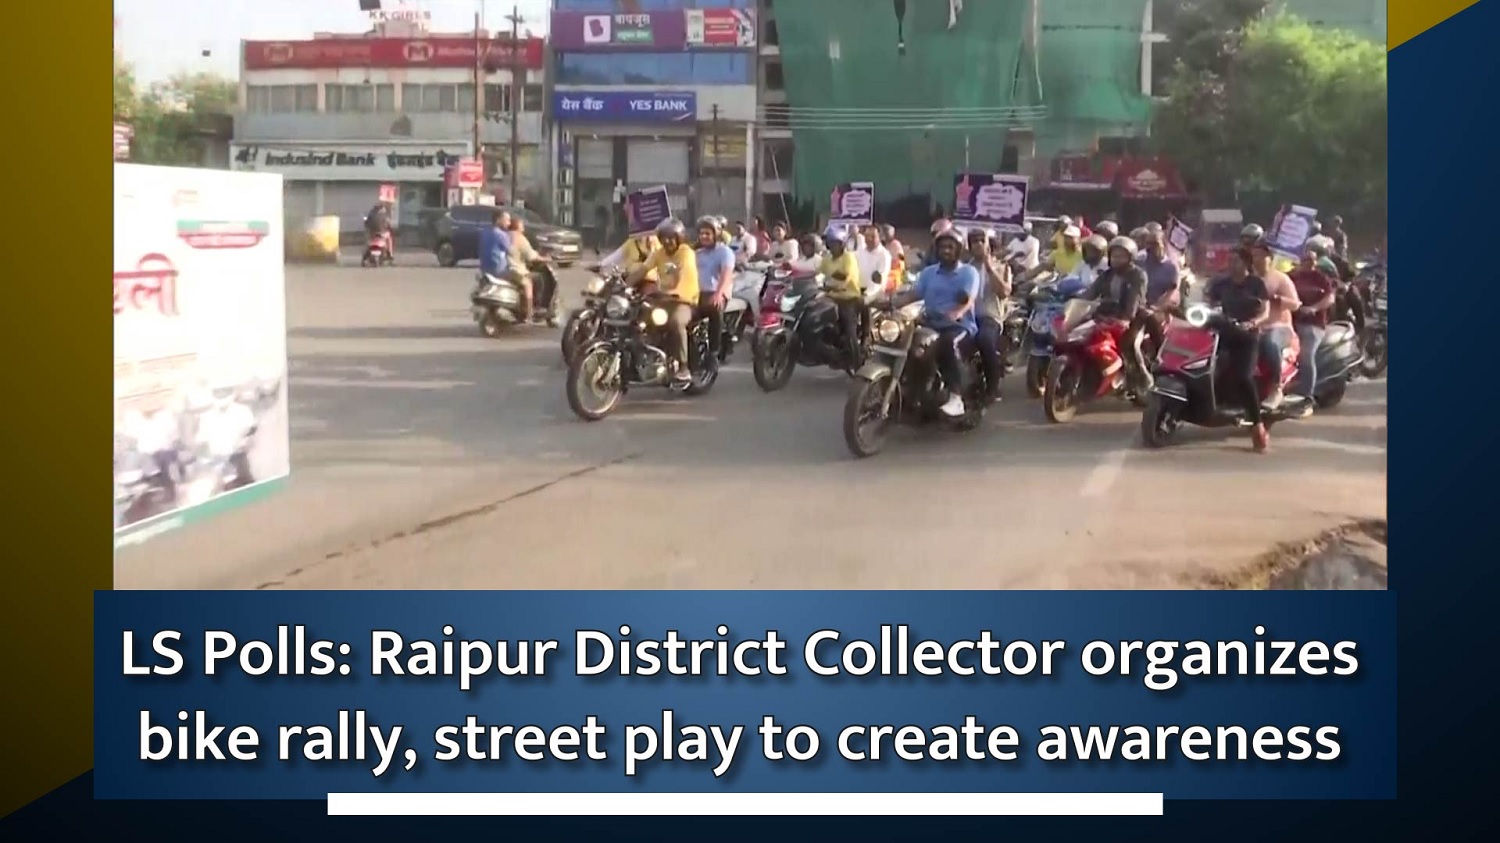 LS Polls: Raipur District Collector organizes bike rally, street play to create awareness regarding voting